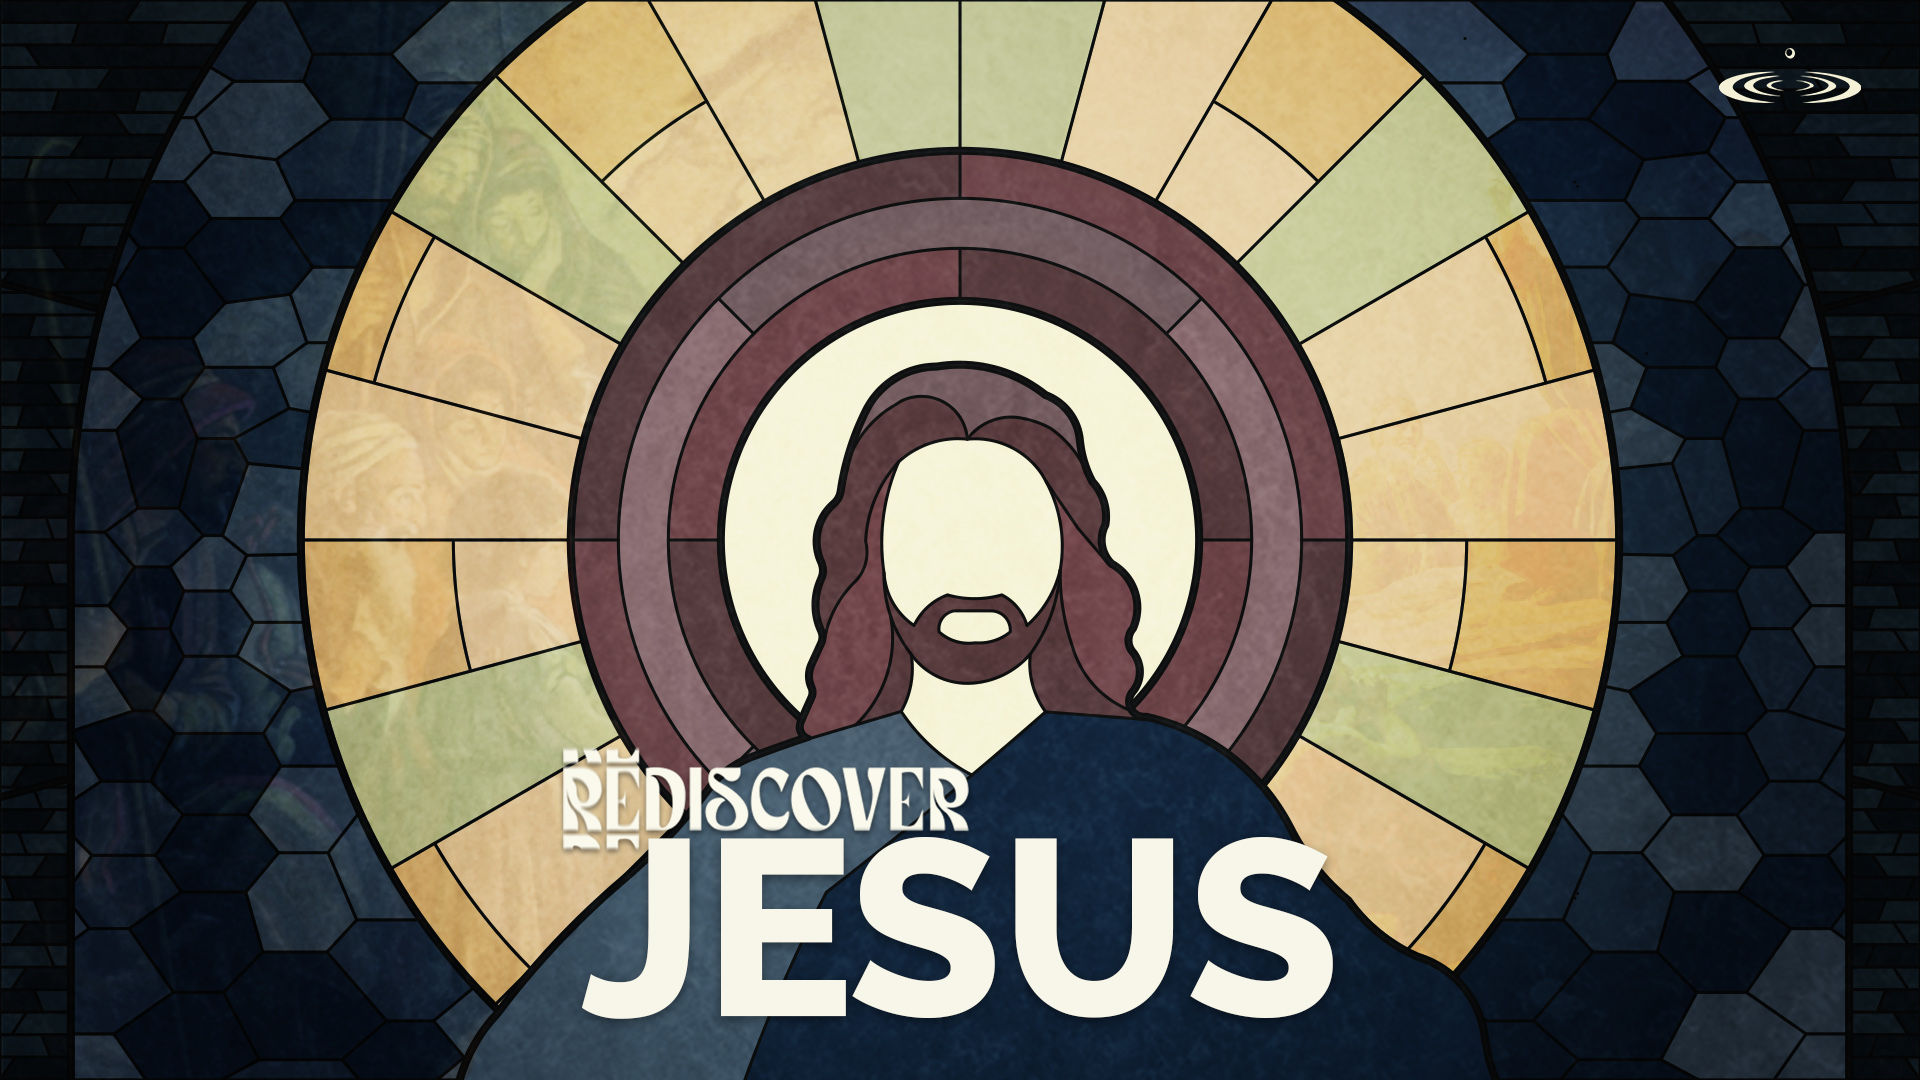 Rediscover Jesus Part 5: “Jesus Cleanses”